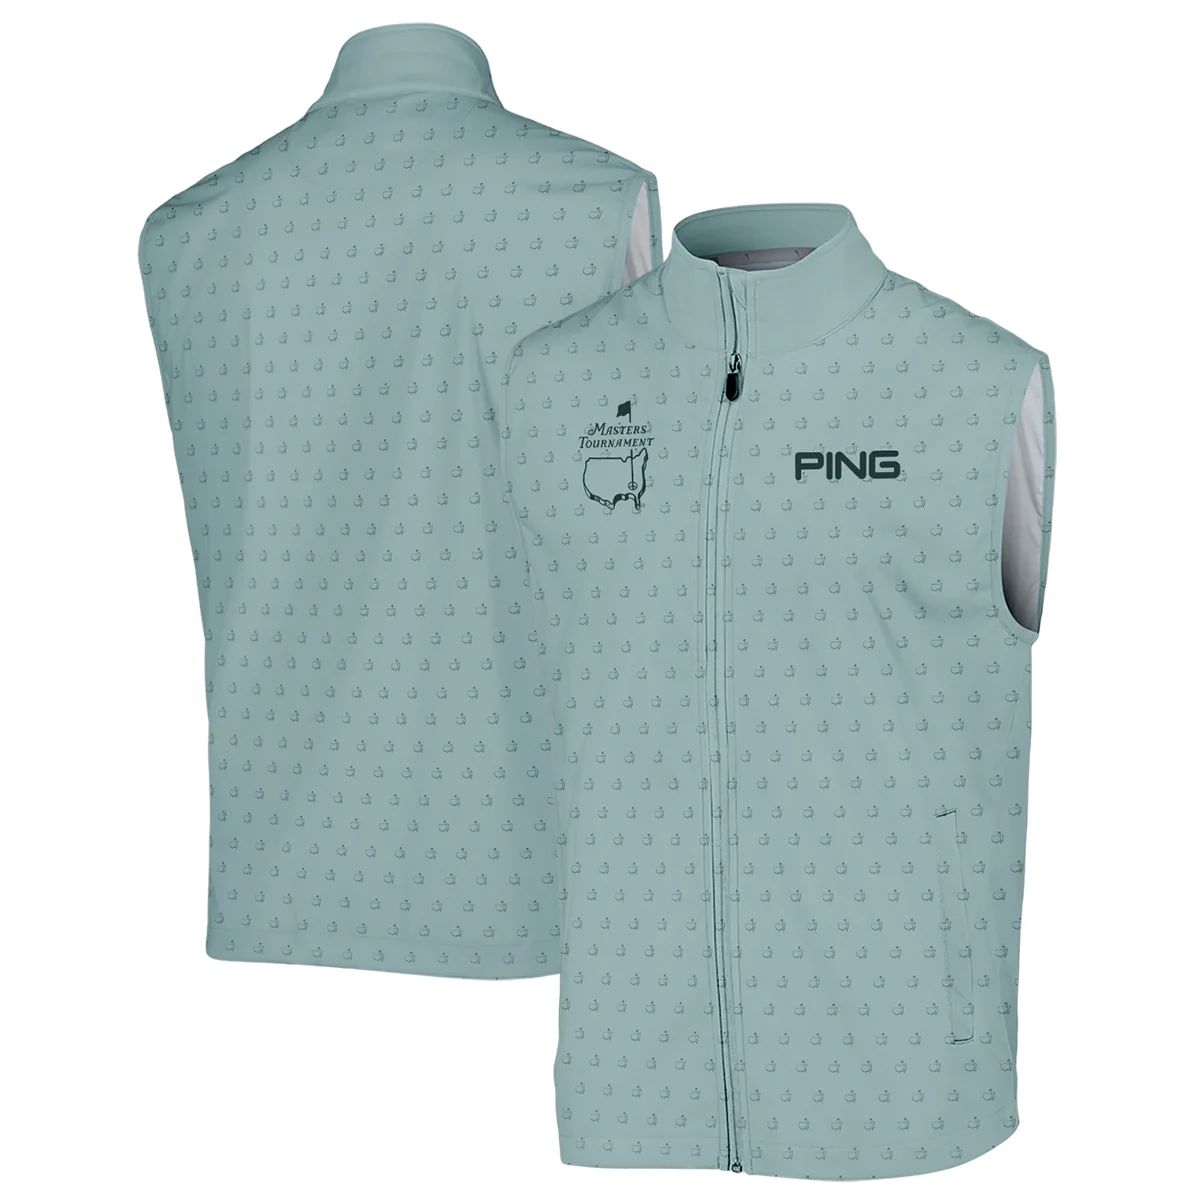 Golf Pattern Masters Tournament Ping Hoodie Shirt Cyan Pattern All Over Print Hoodie Shirt